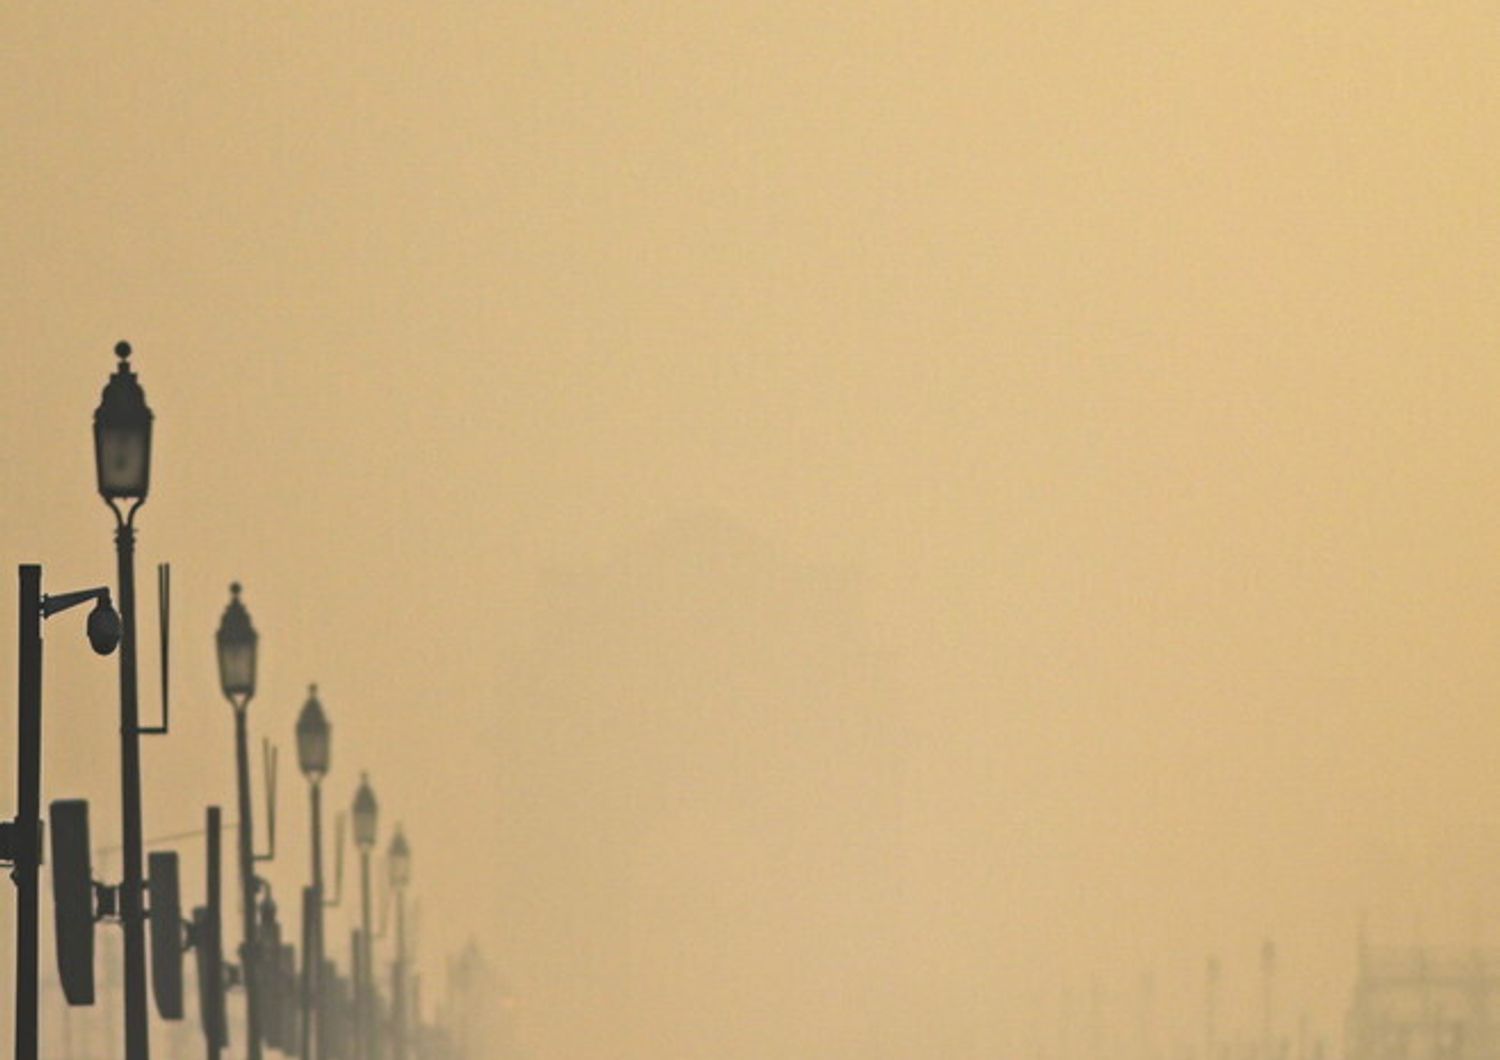 Smog a Nuova Delhi